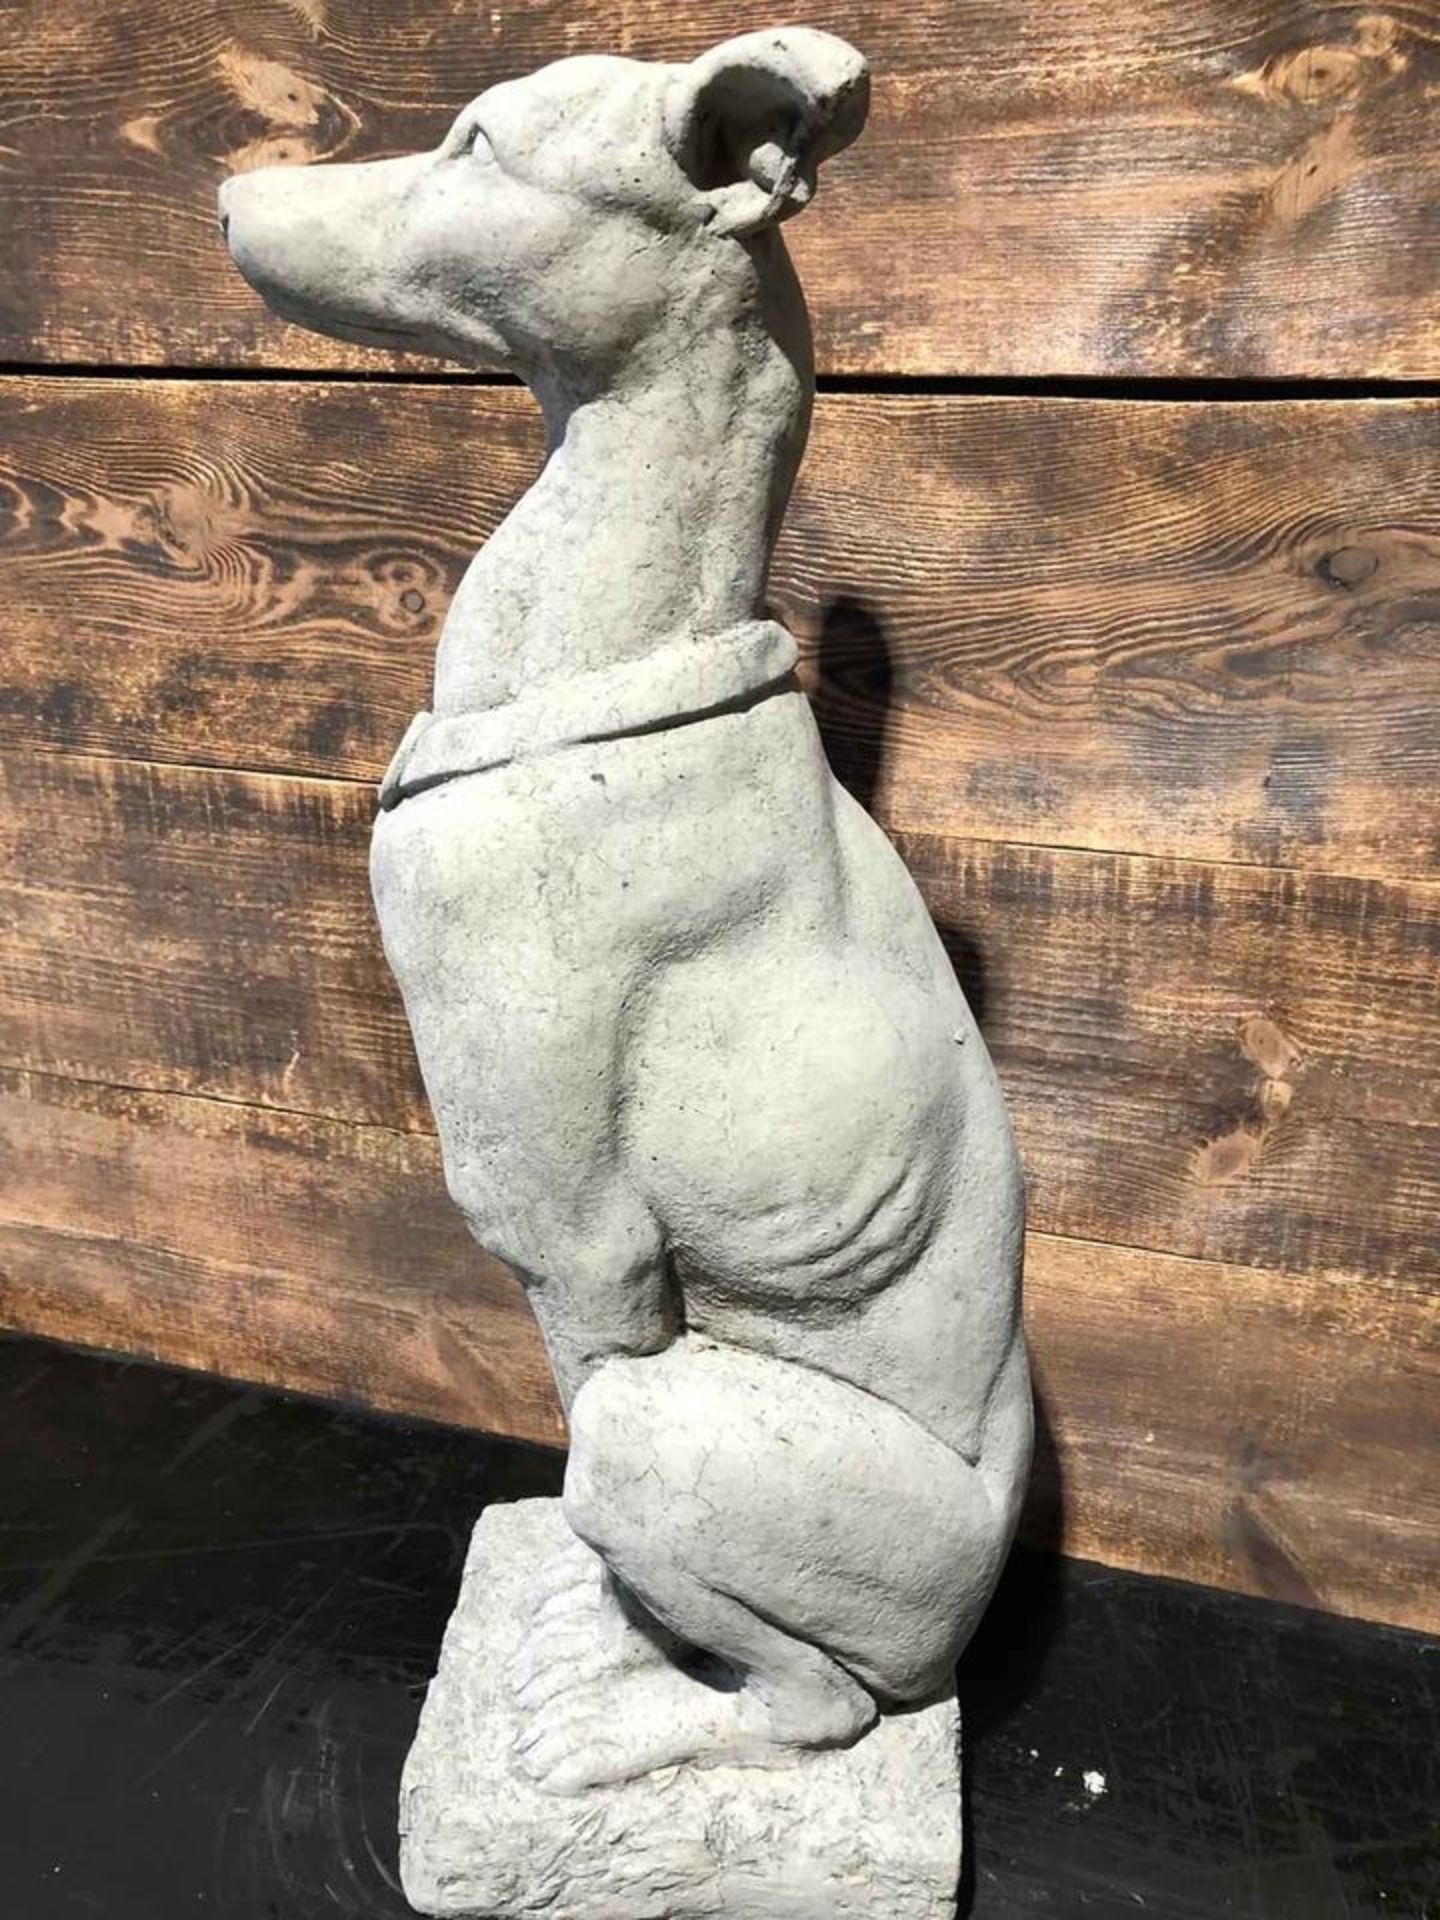 * Large Stone Greyhound sitting on a plinth